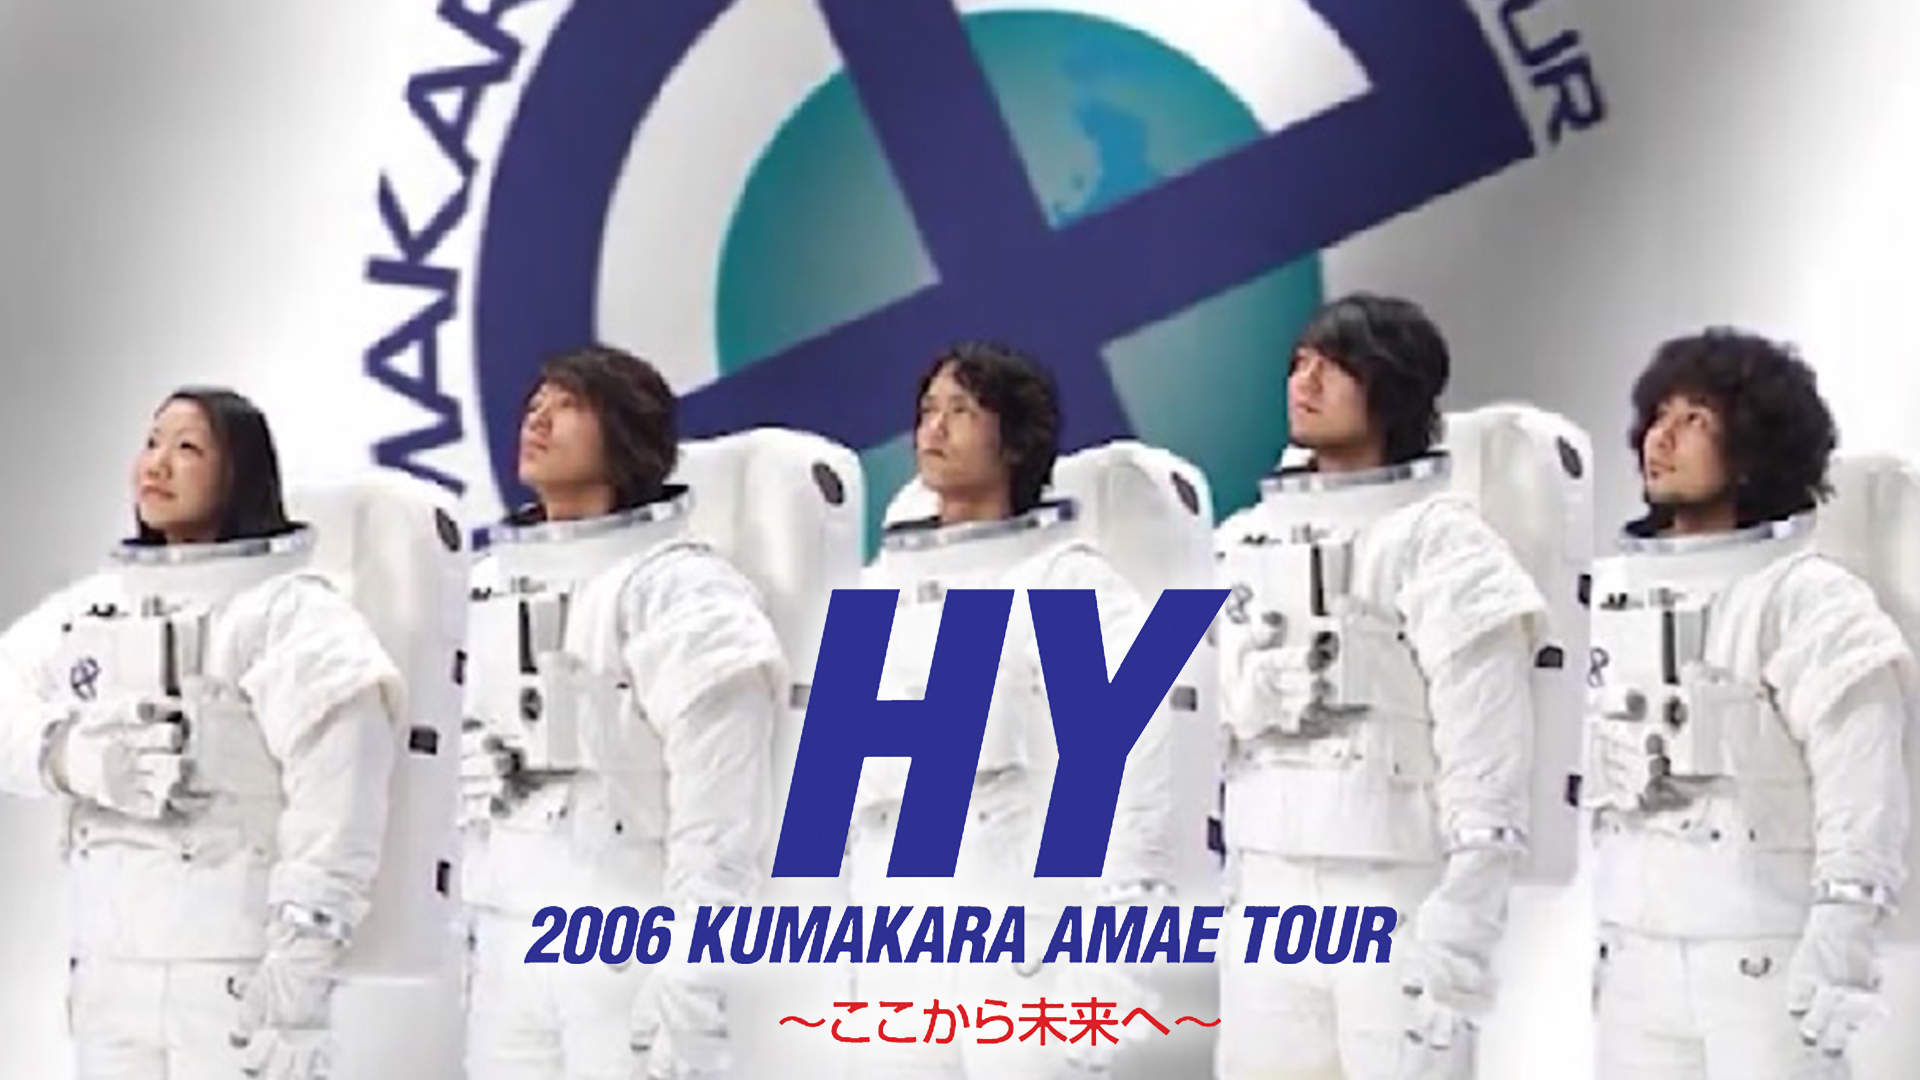 HY 2006 KUMAKARA AMAE TOUR 〜ここから未来へ〜(音楽・ライブ / 2007) - 動画配信 | U-NEXT  31日間無料トライアル